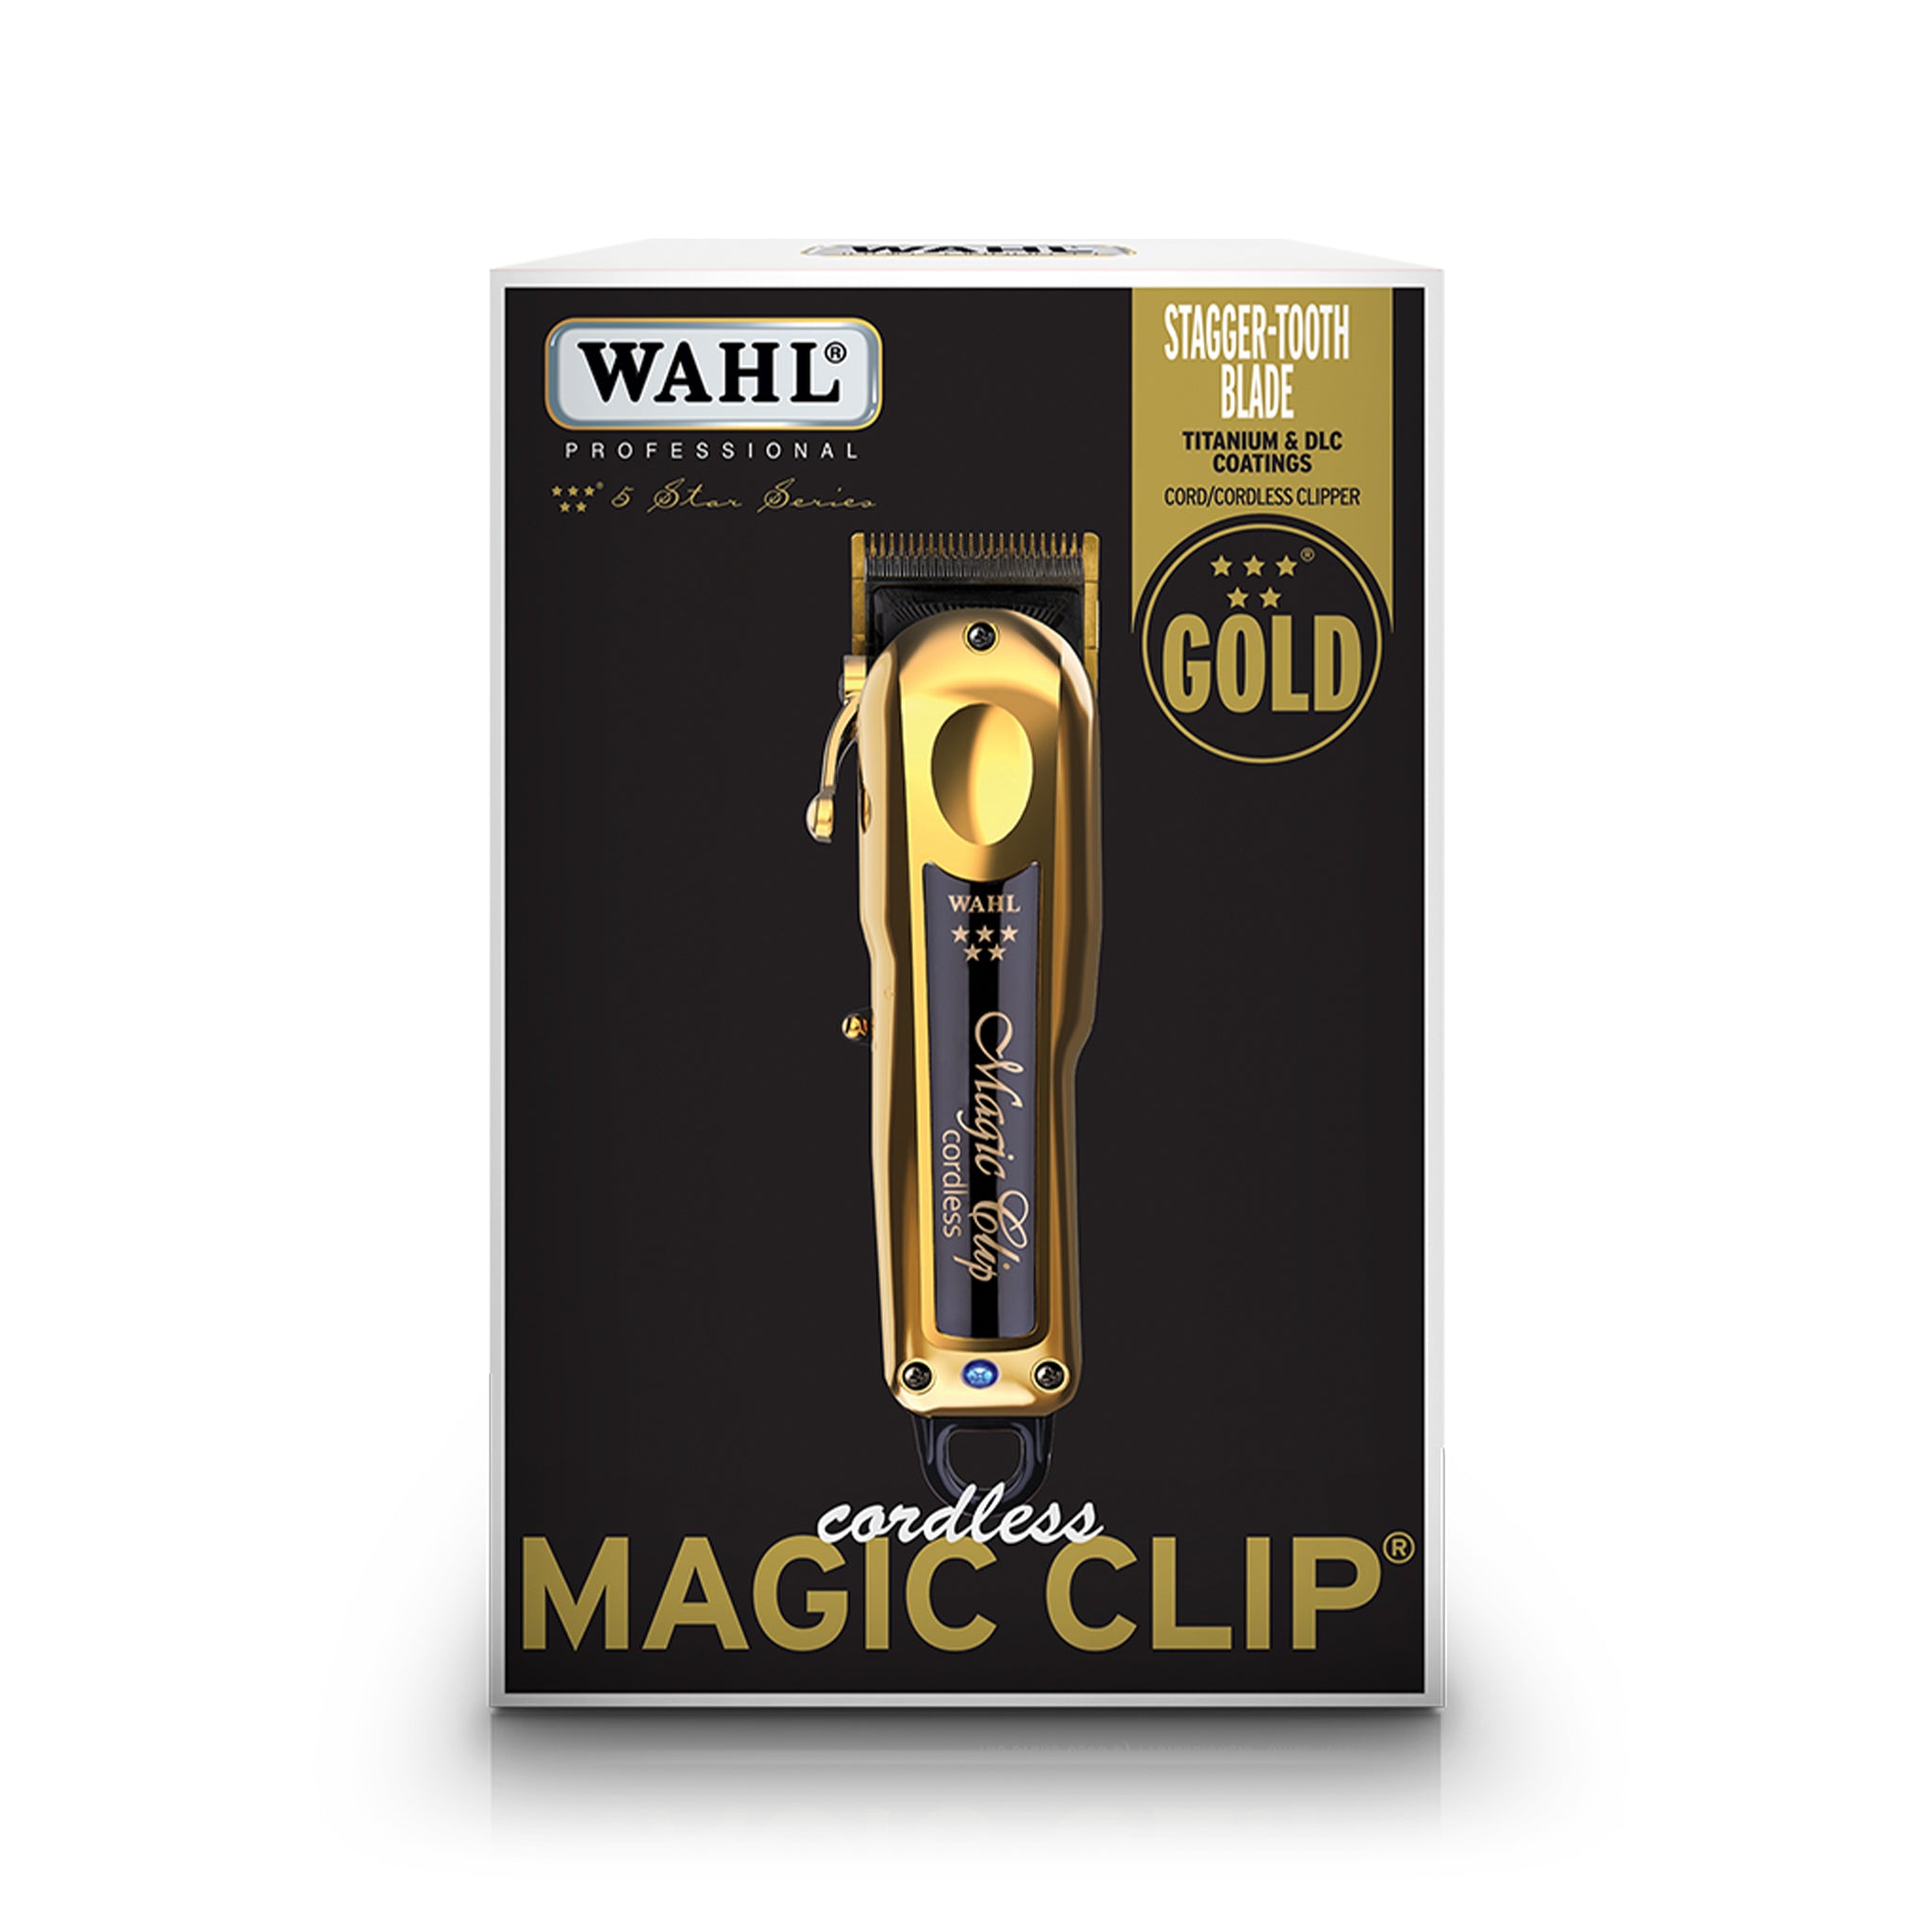 Wahl Gold Cordless Magic Clip